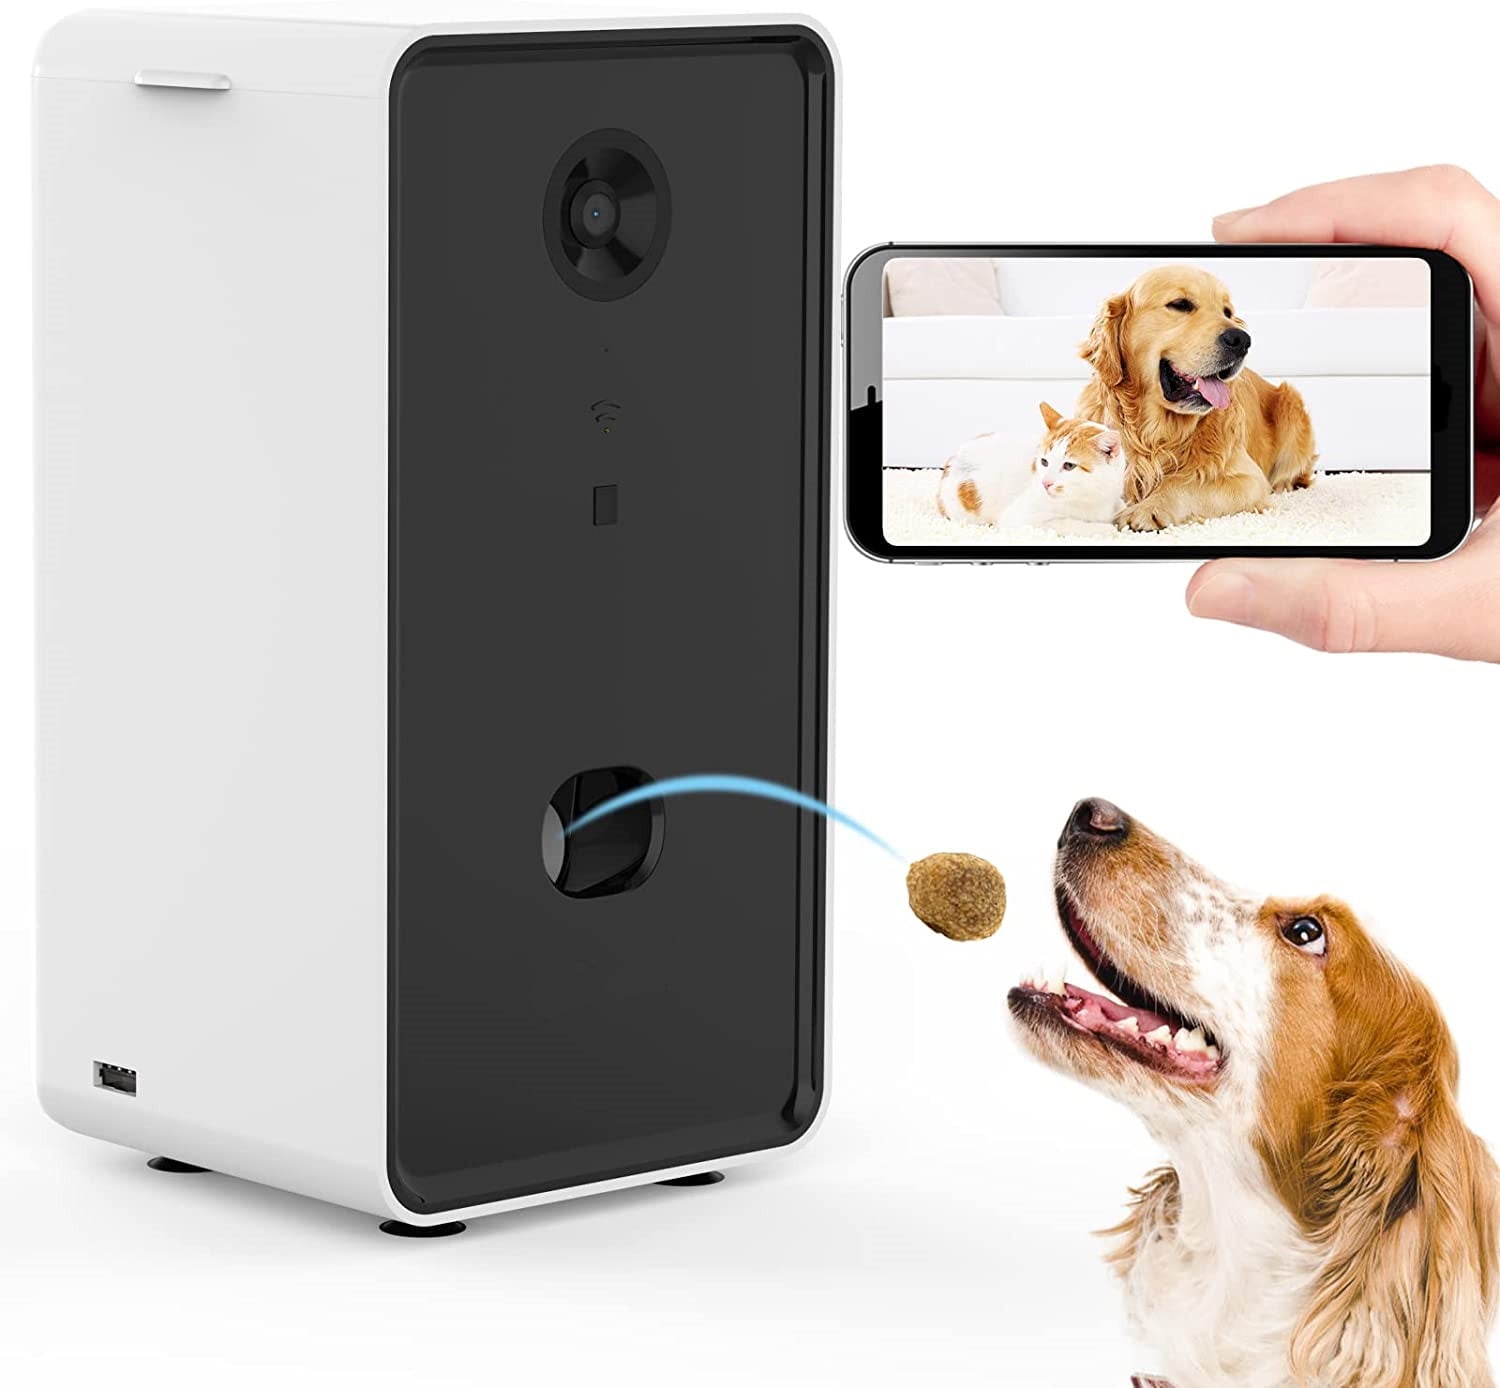 Meowant Dog Treat Dispenser with 2K Camera